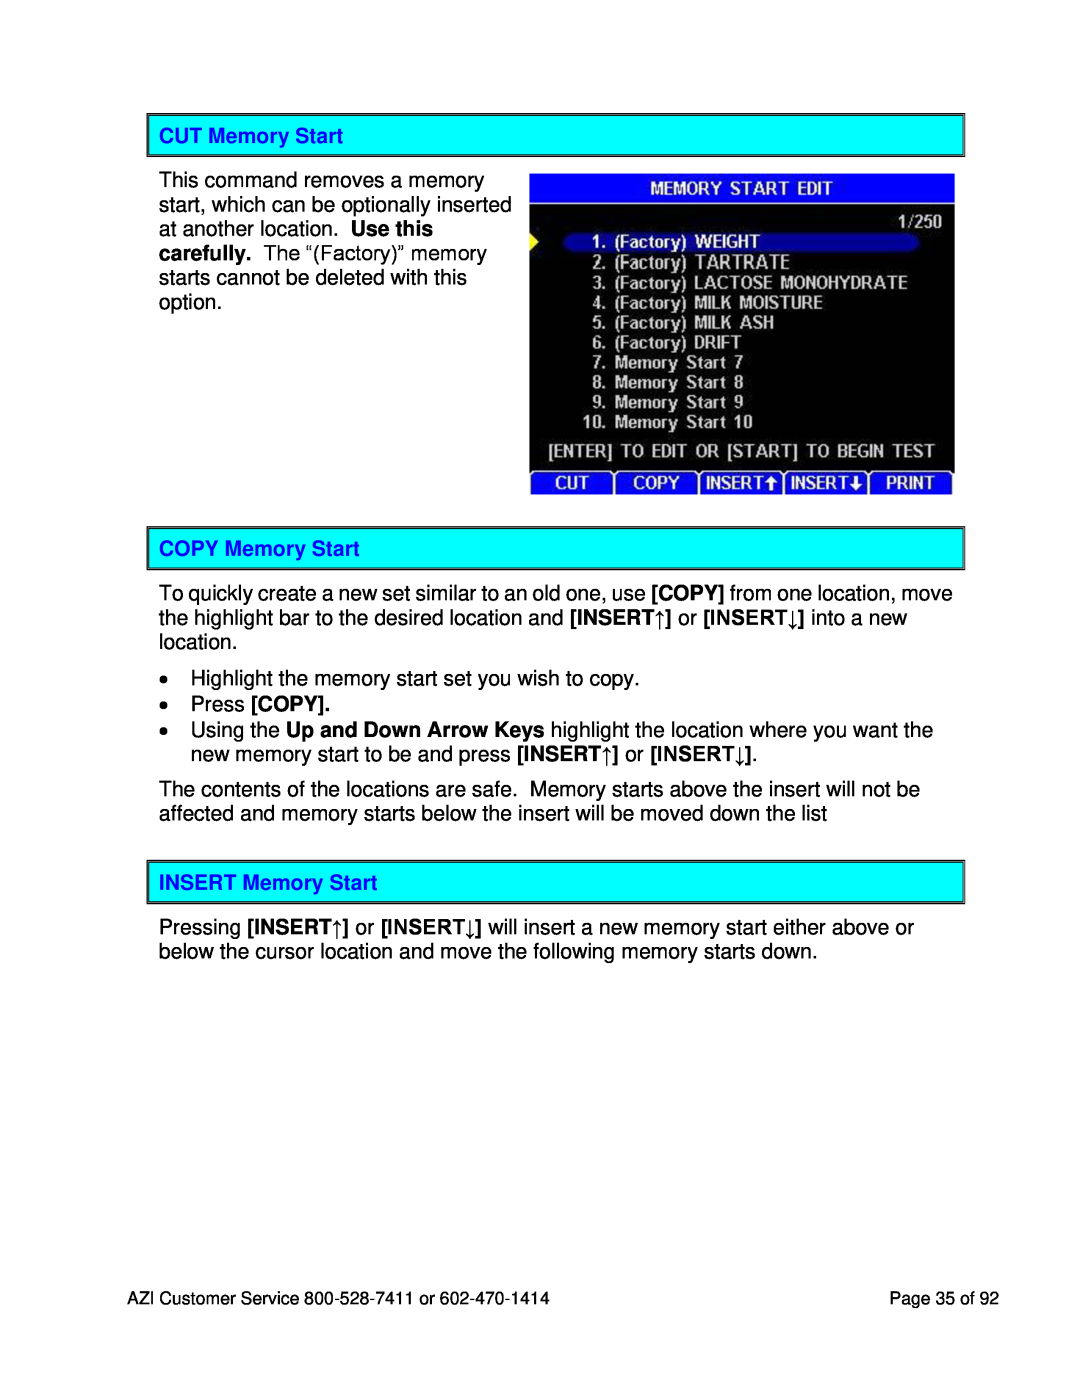 Arizona MAX-5000XL user manual CUT Memory Start, COPY Memory Start, INSERT Memory Start, ∙ Press COPY 